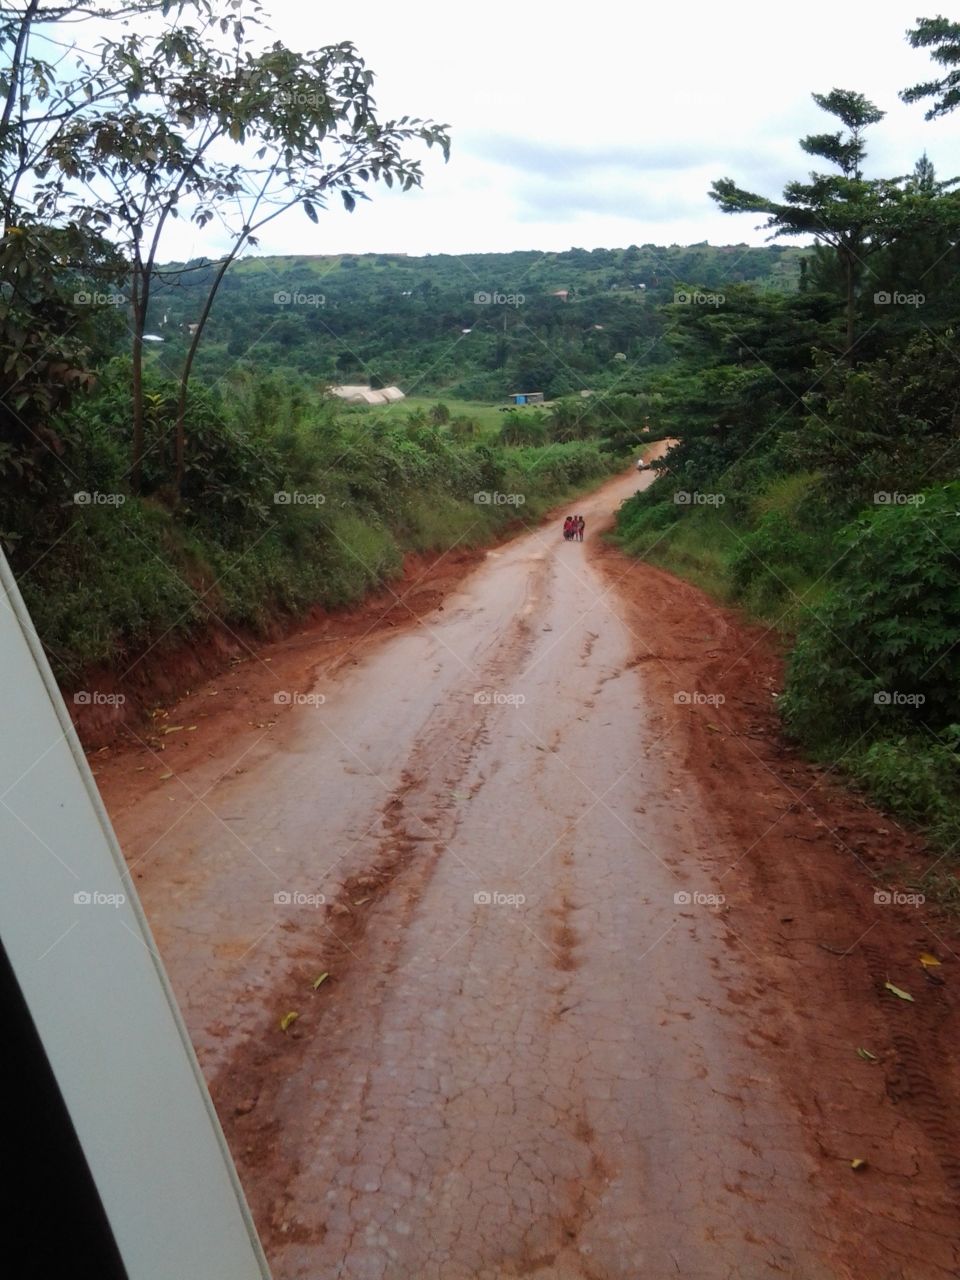 Barefoot Ugandan children chase a van down a rutted dirt road just tell mzungus goodbye